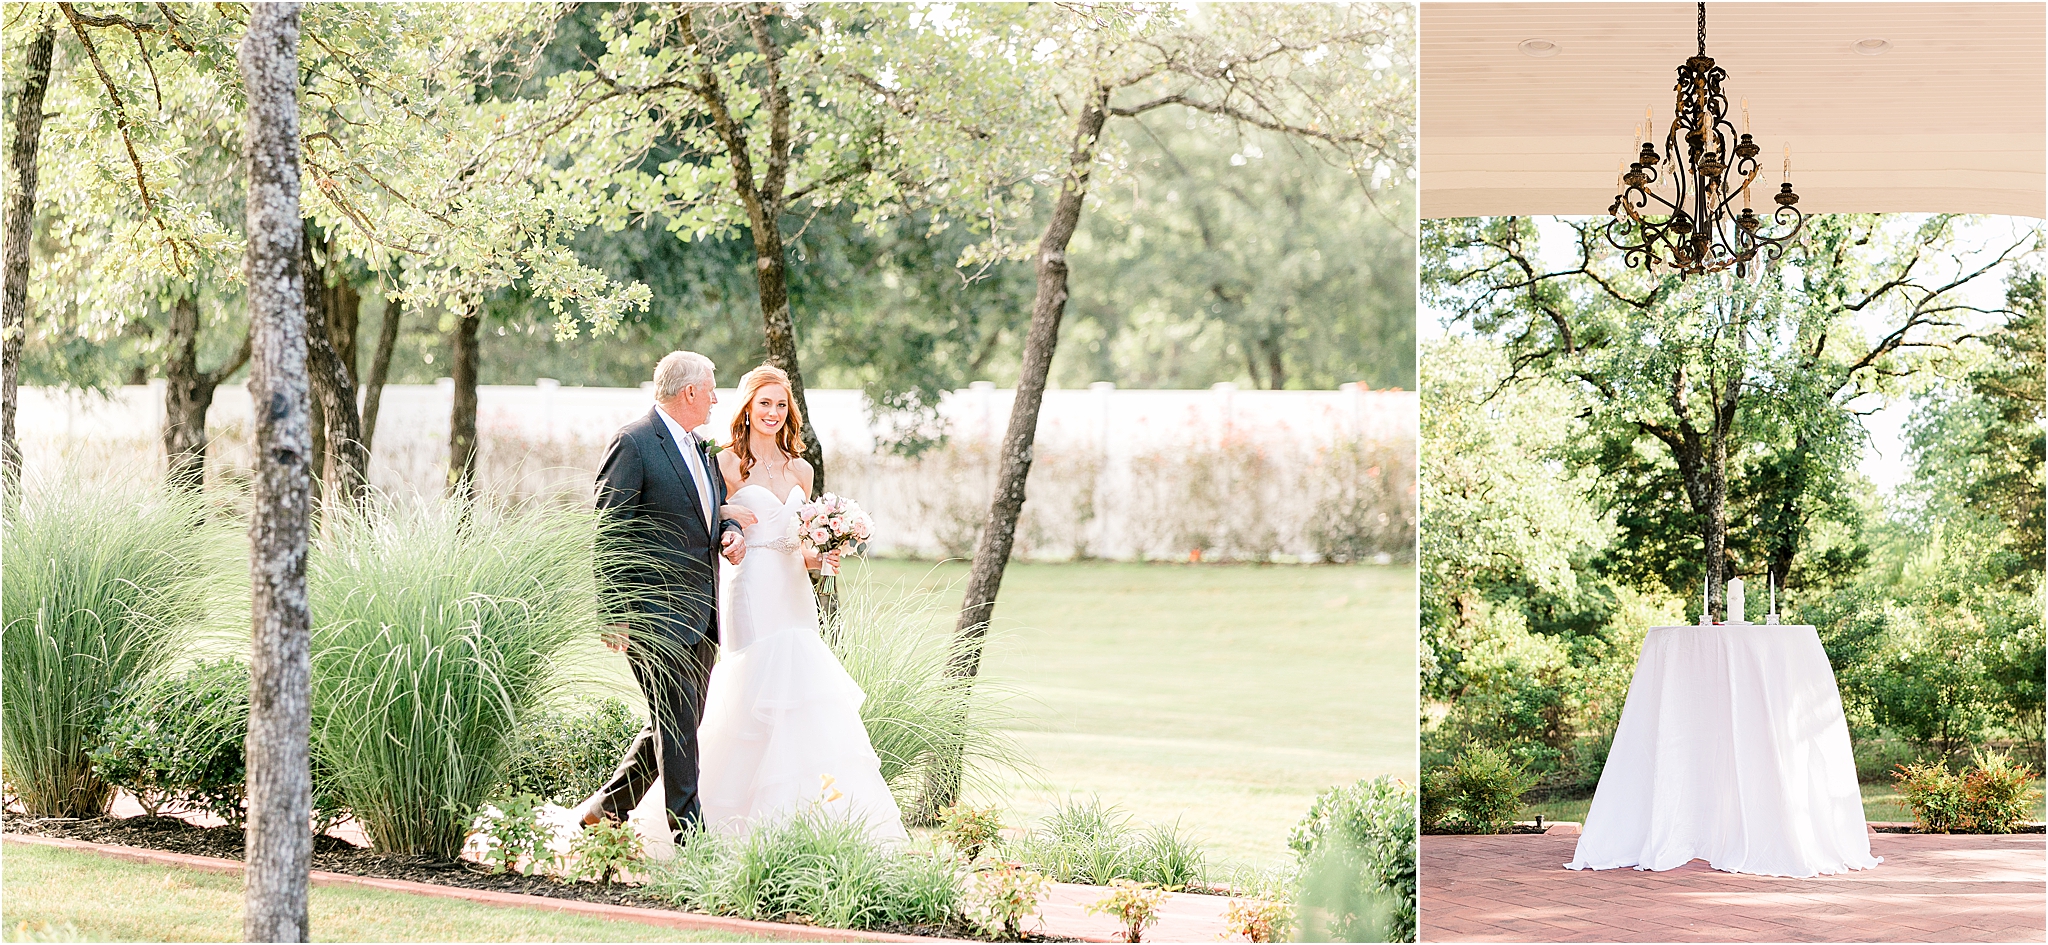 Spring Wedding Ceremony at Rockwall Manor in Dallas, TX by DFW Wedding Photographer Jillian Hogan 